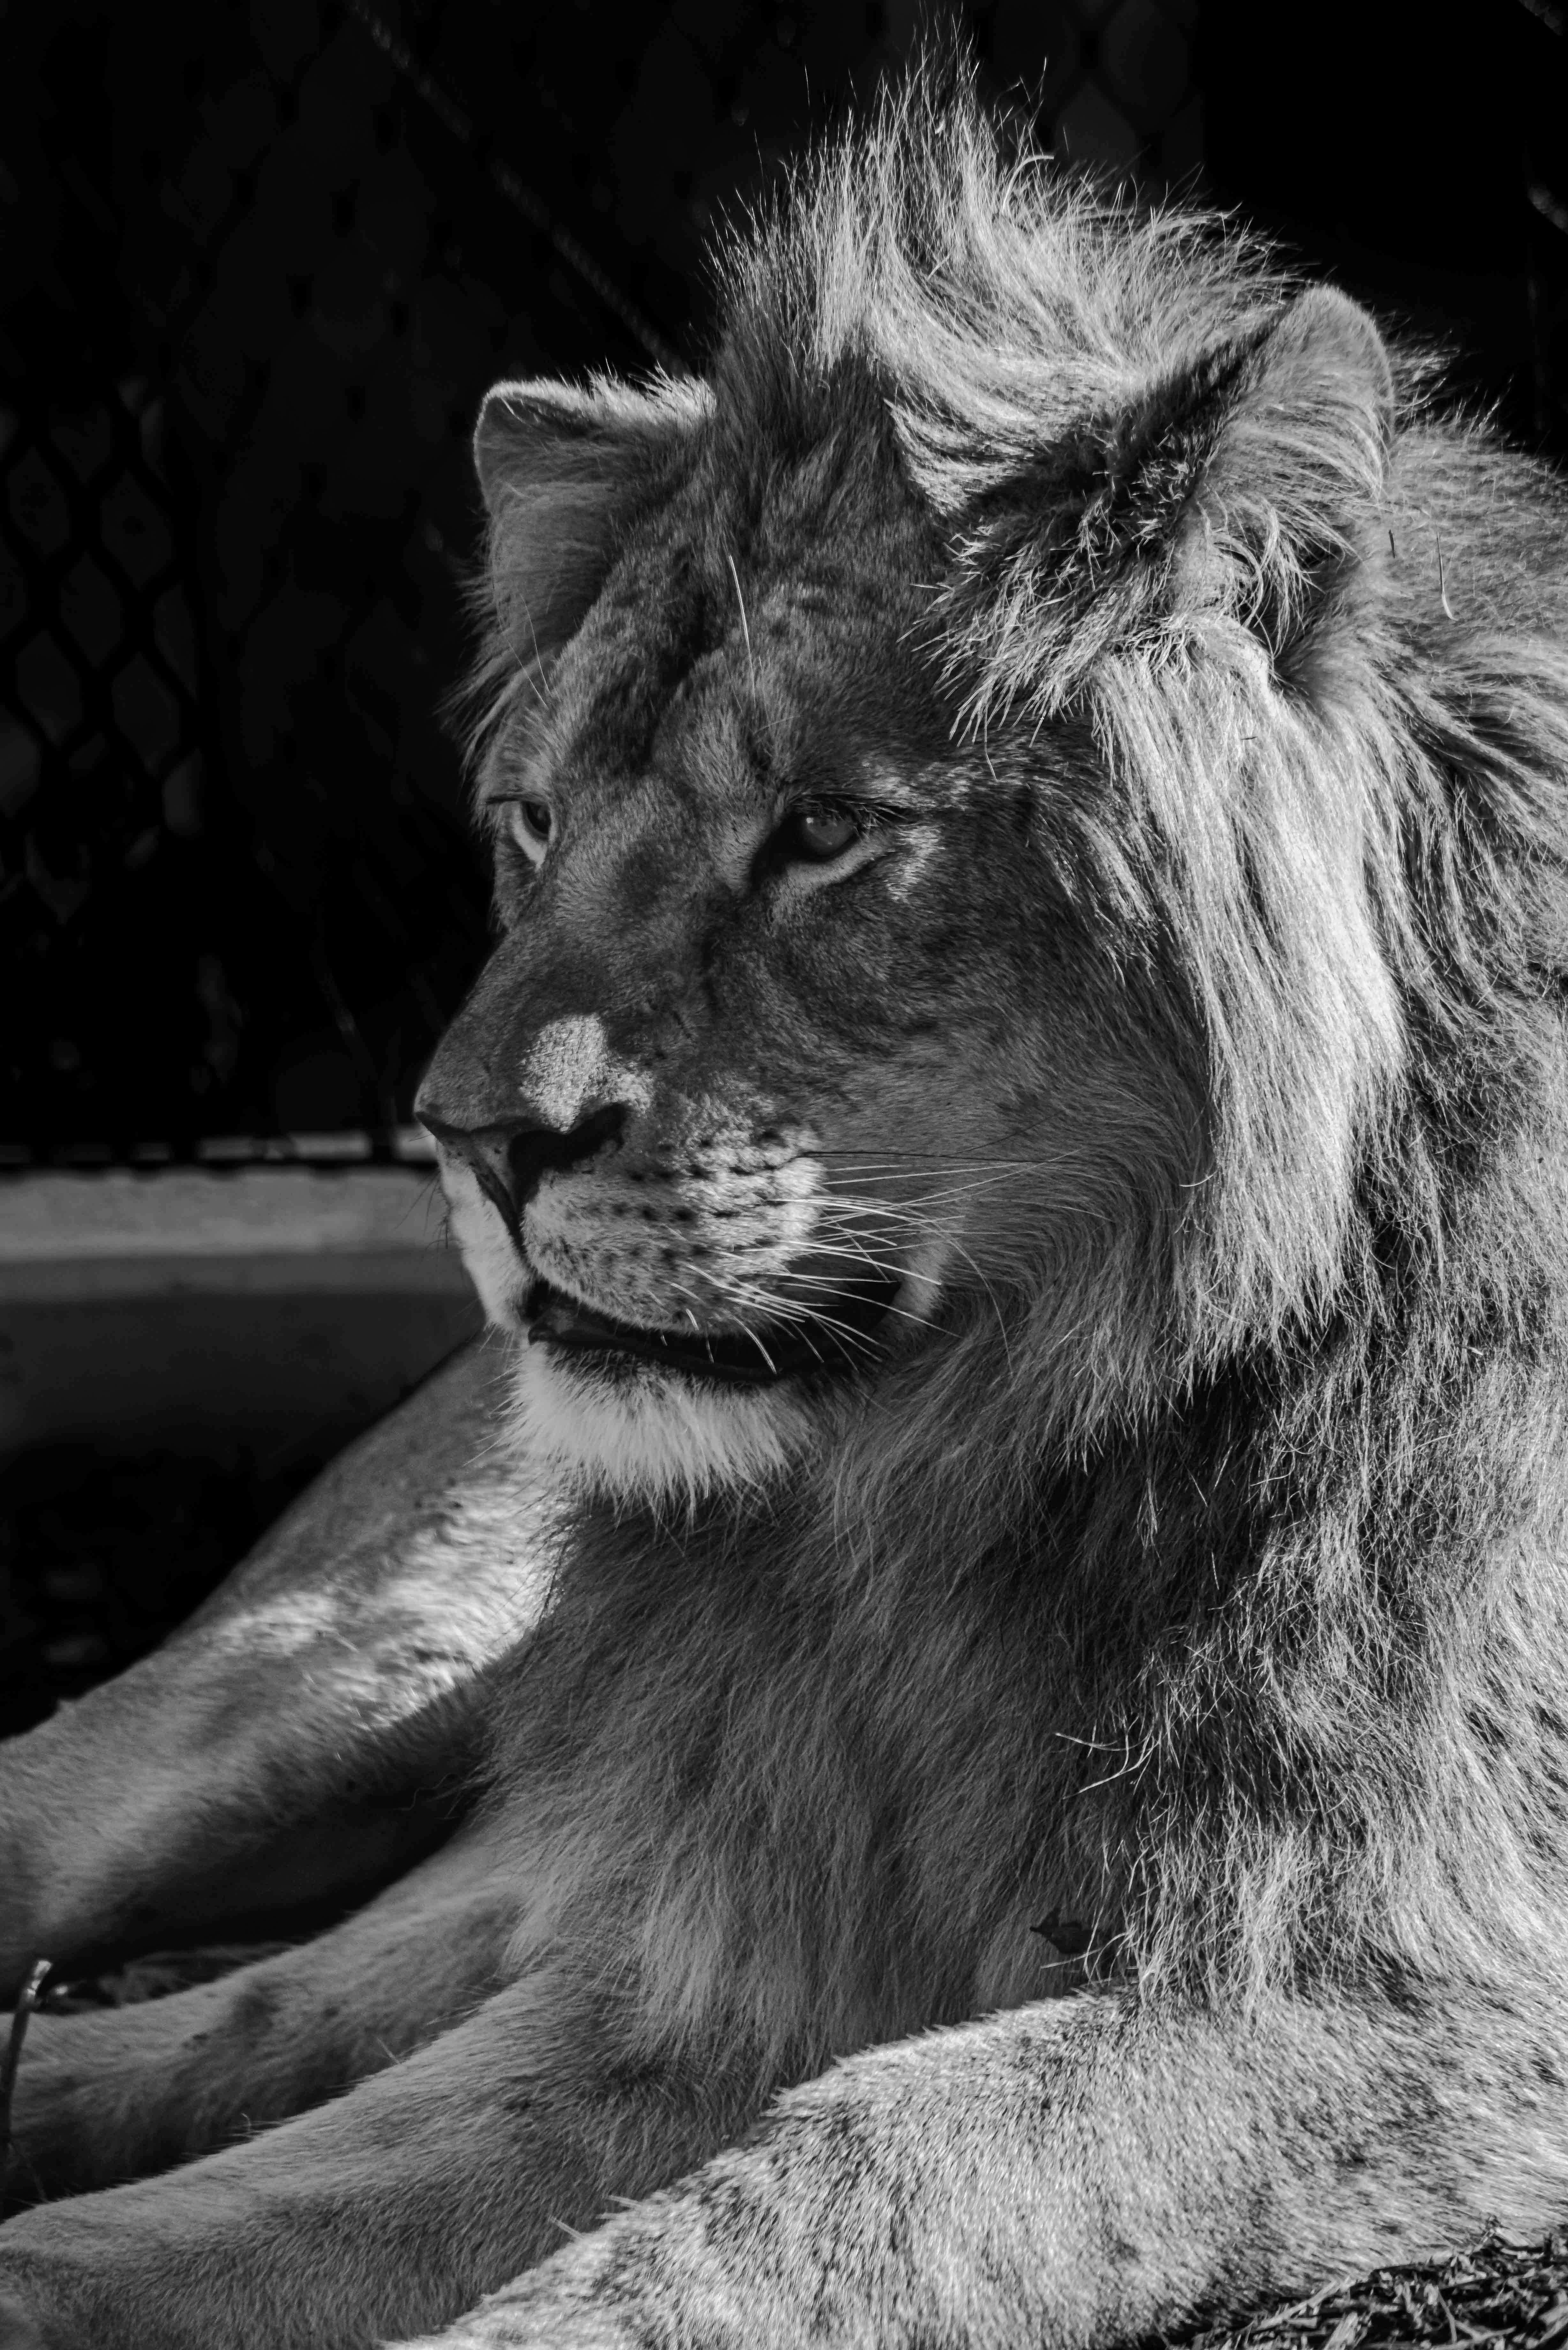 SEMD230 - DSC_7701 B&W - 
African Savannah Lion, Taronga Zoo,  Sydney, NSW, Australia.
1st July 2020 - 2.43pm
Camera - Nikon D800 
F8 - ISO 800 - 1/640 second - Focal Length 300mm